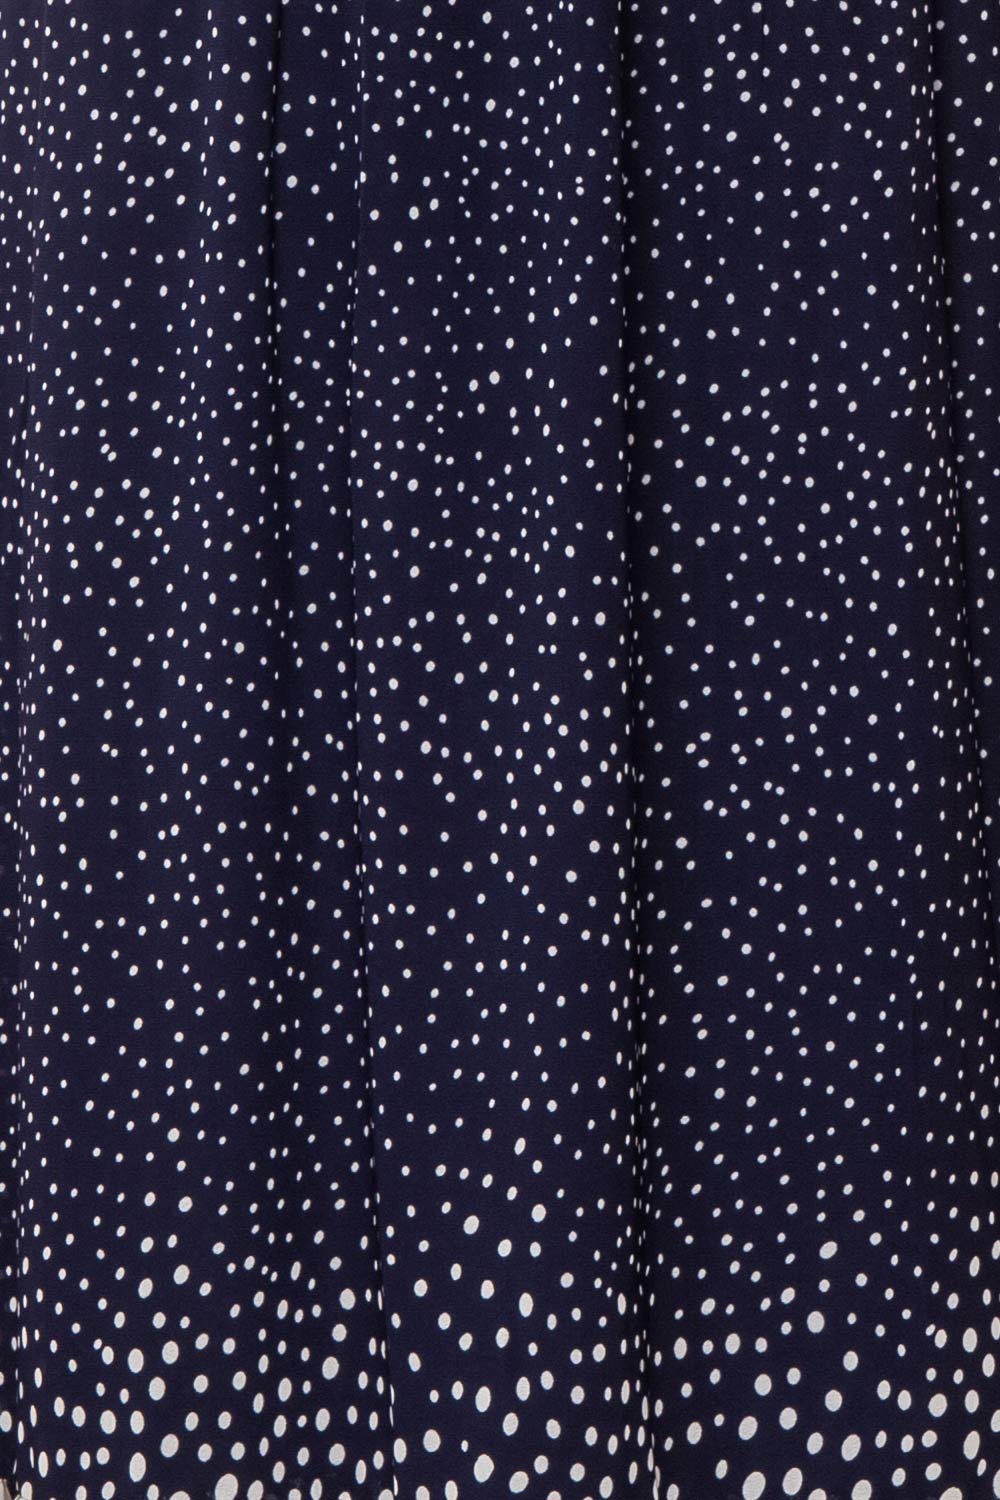 Bergljot Navy Blue & White Polkadot A-Line Dress | Boutique 1861 fabric detail 